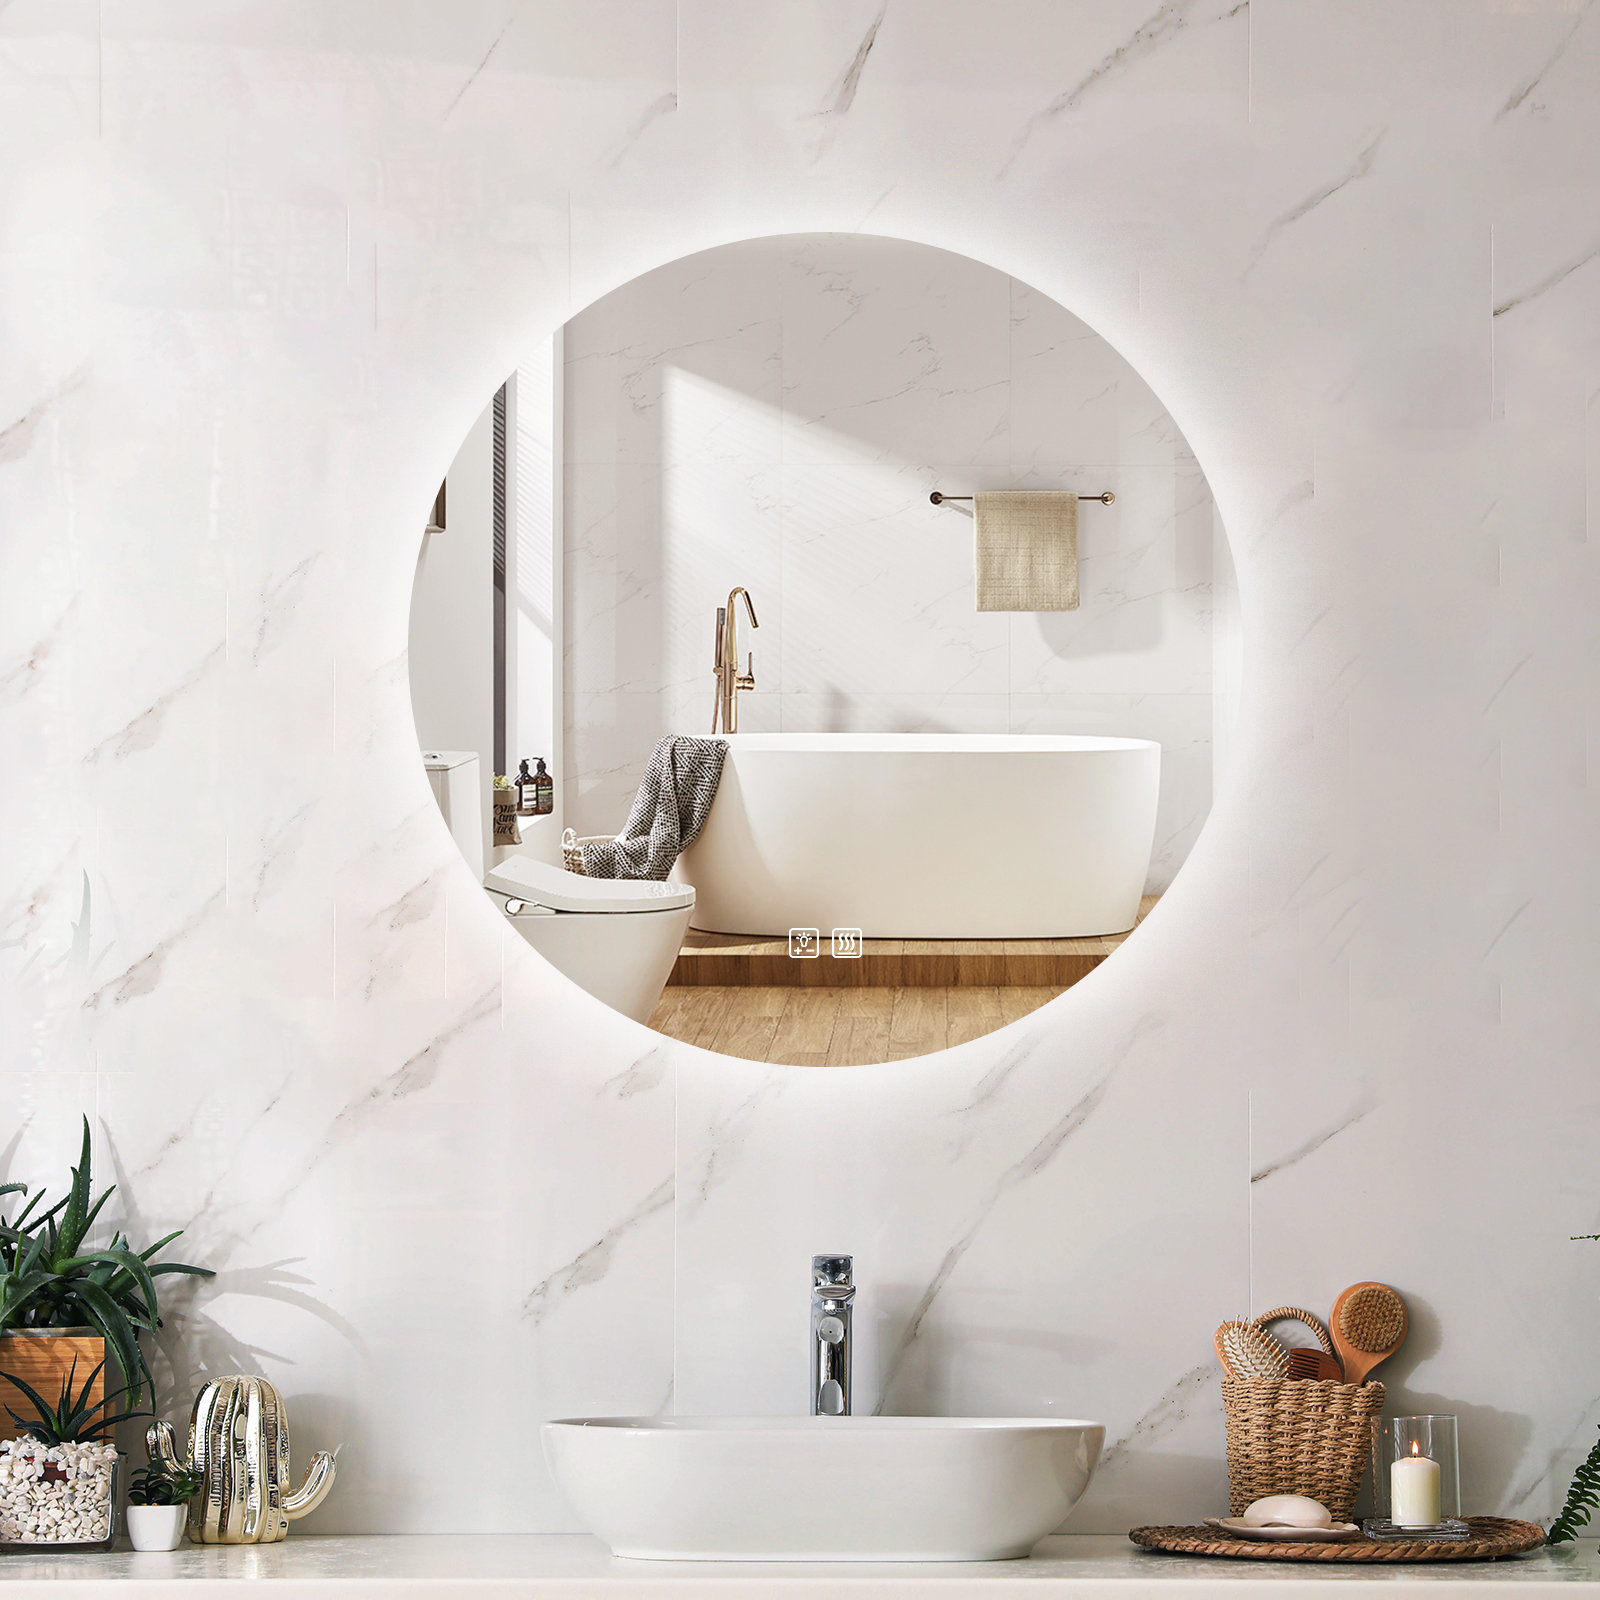 Orren Ellis LED Mirror Bathroom Vanity Mirror Adjustable 3 Colors White/Warm/Natural Lights High Lumen, Wall Mounted Anti-Fog Dimmer Makeup Mirrors Wi